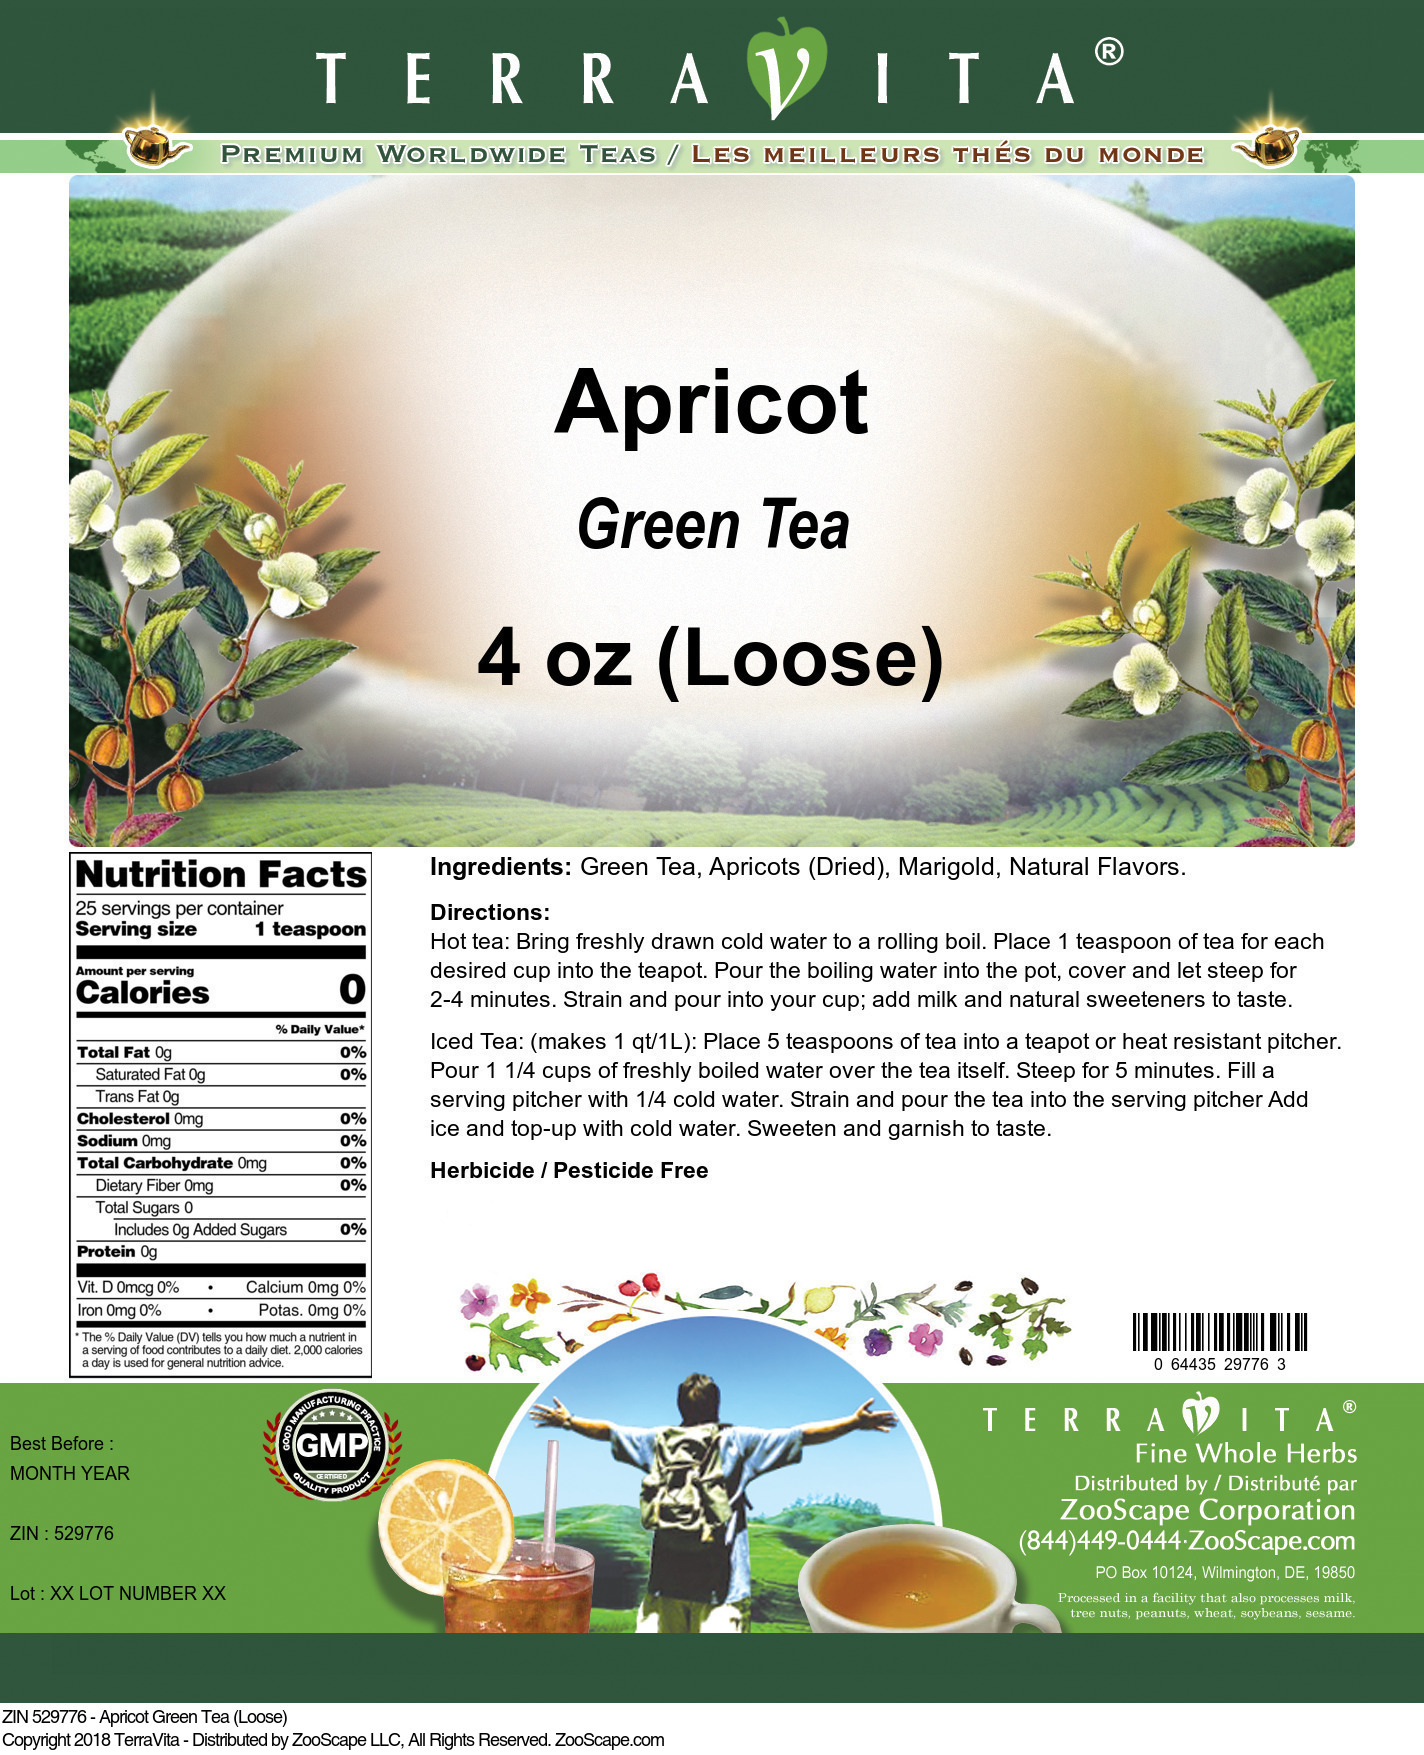 Apricot Green Tea (Loose) - Label